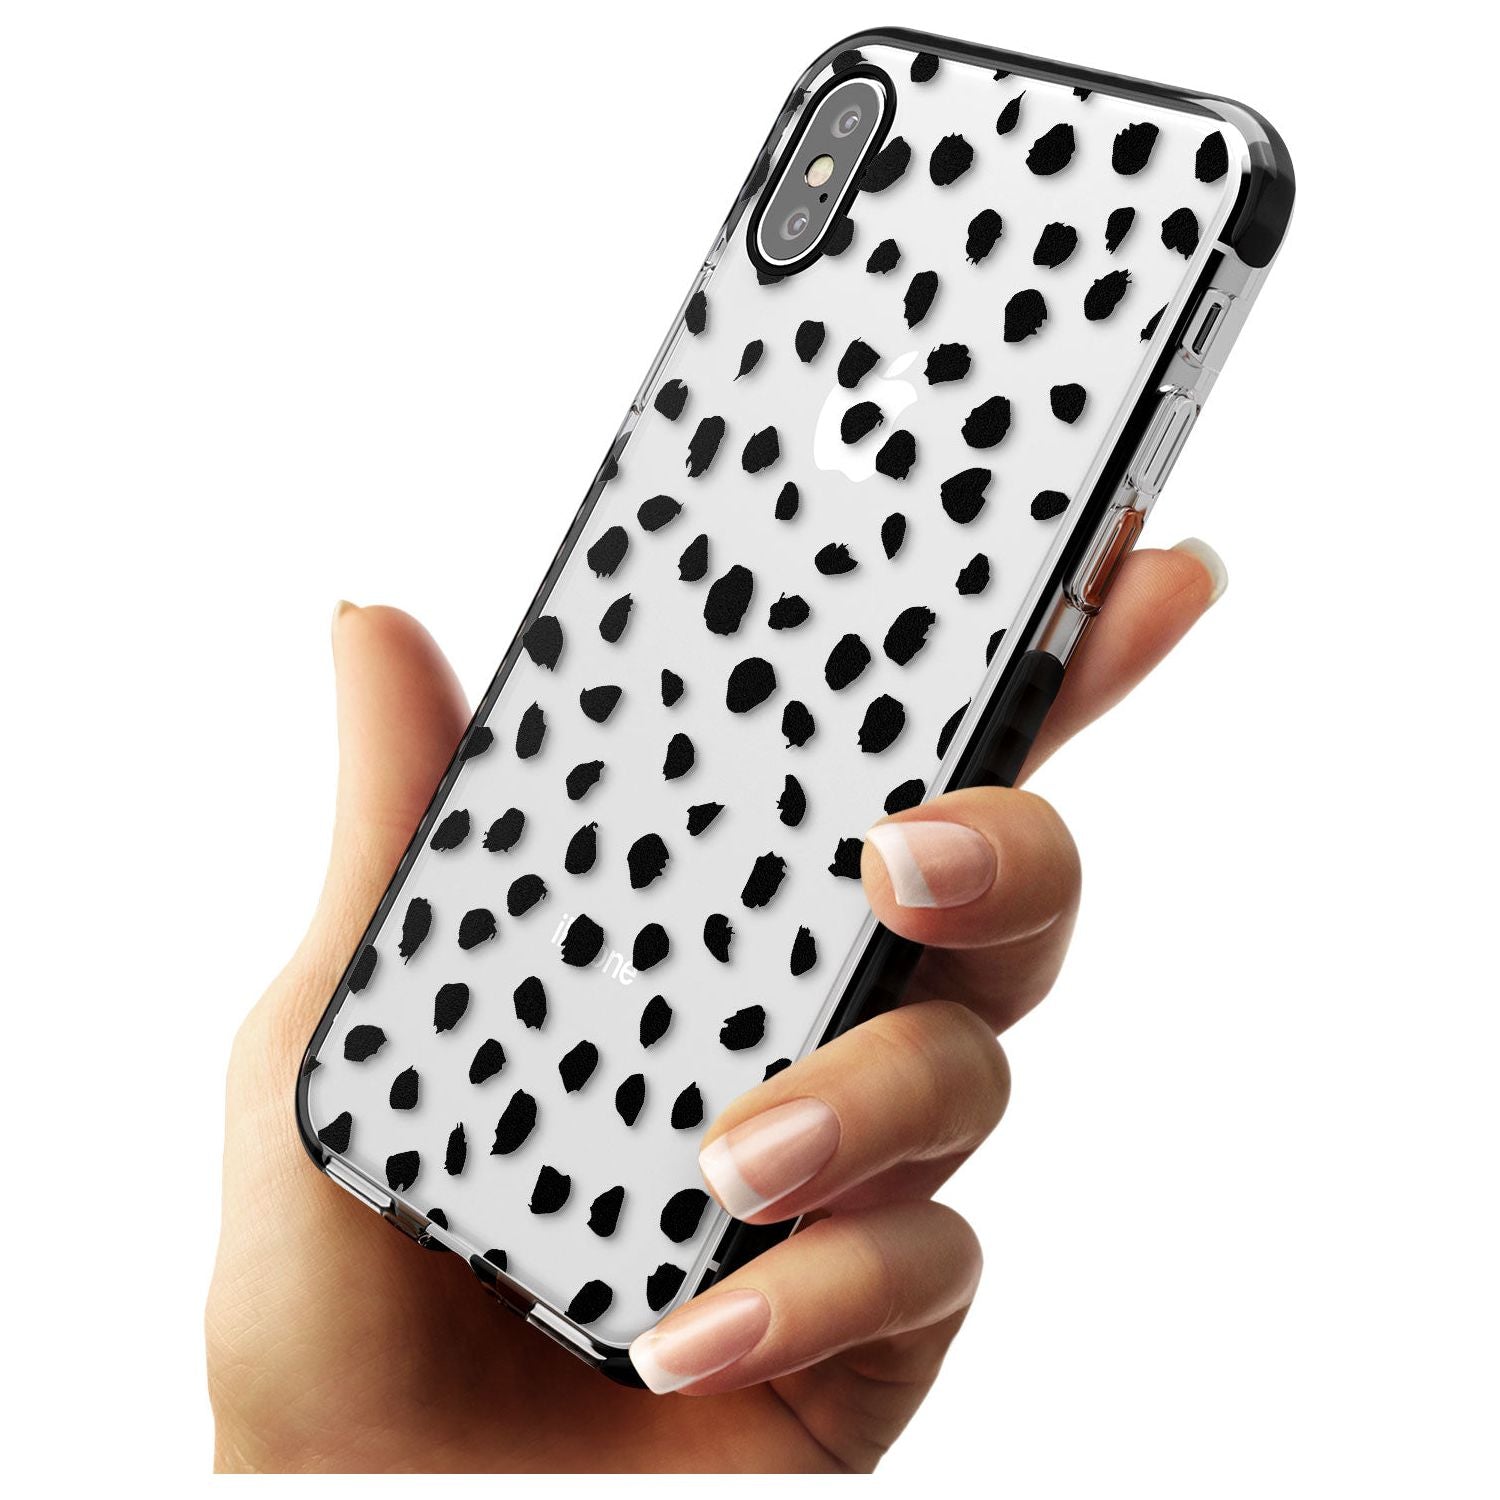 Black on Transparent Dalmatian Polka Dot Spots Black Impact Phone Case for iPhone X XS Max XR